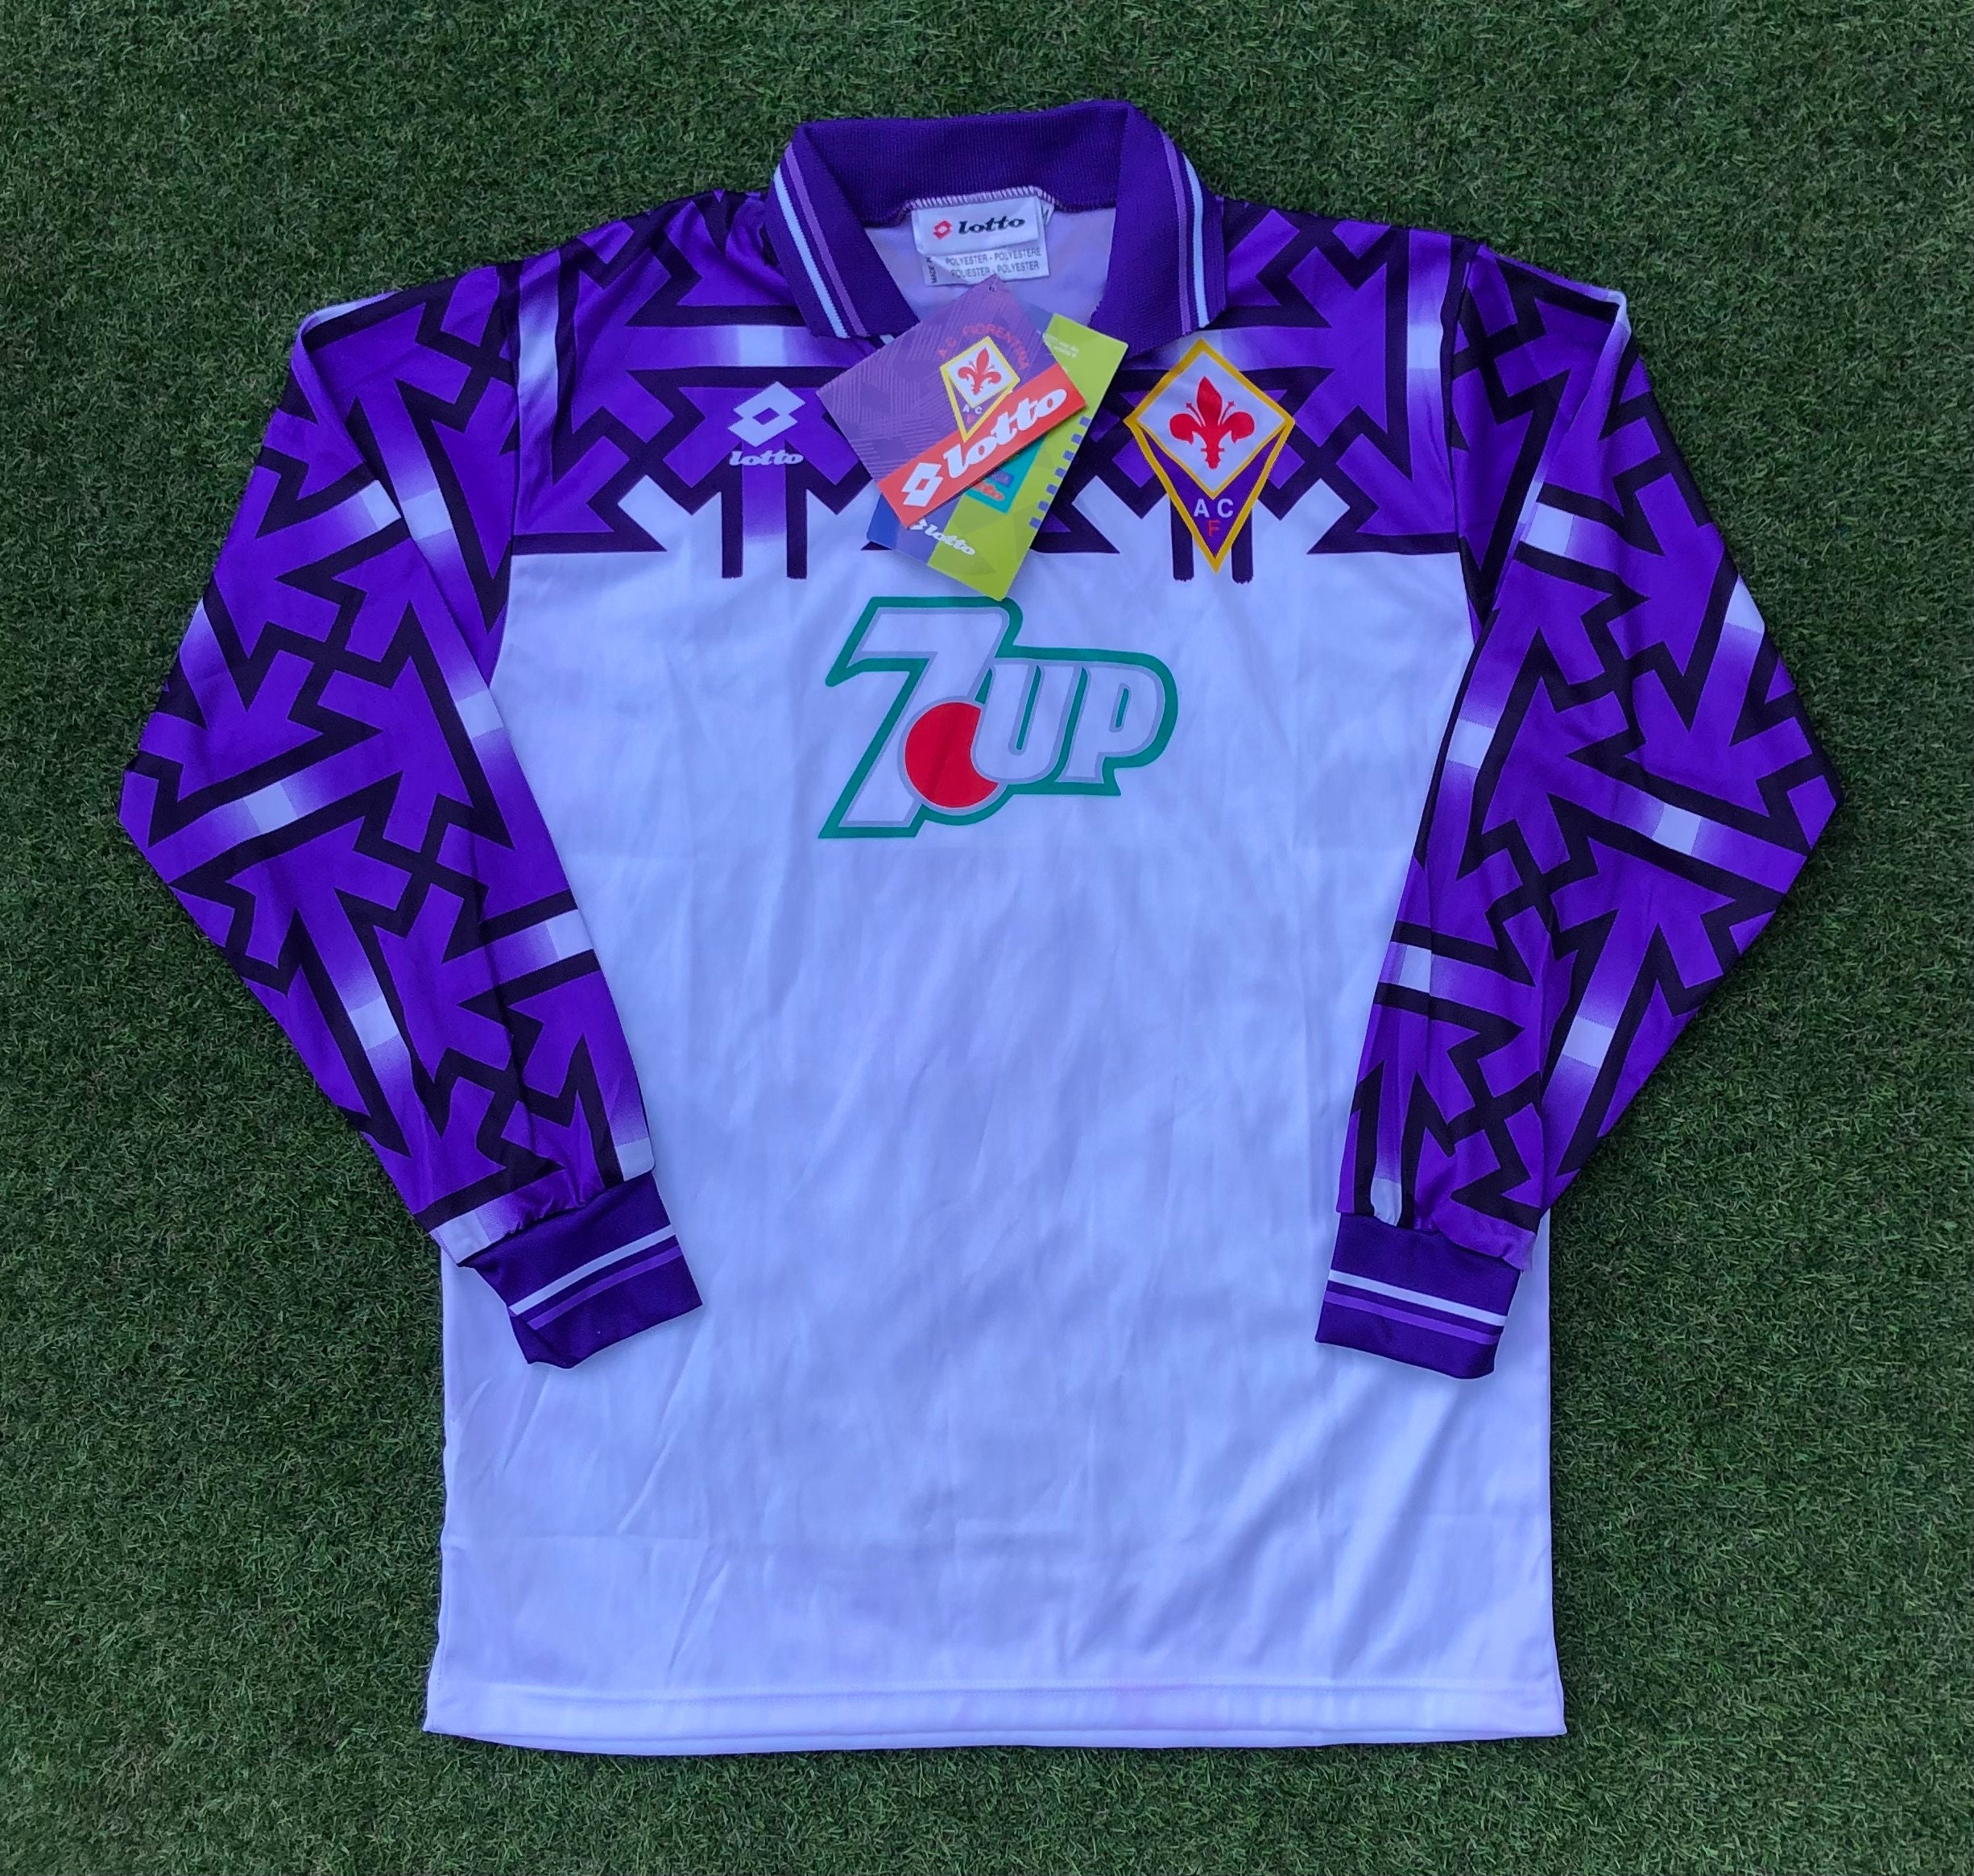 ACF Fiorentina - ACF Fiorentina - Firenze, Italy - Soccer - Hudl